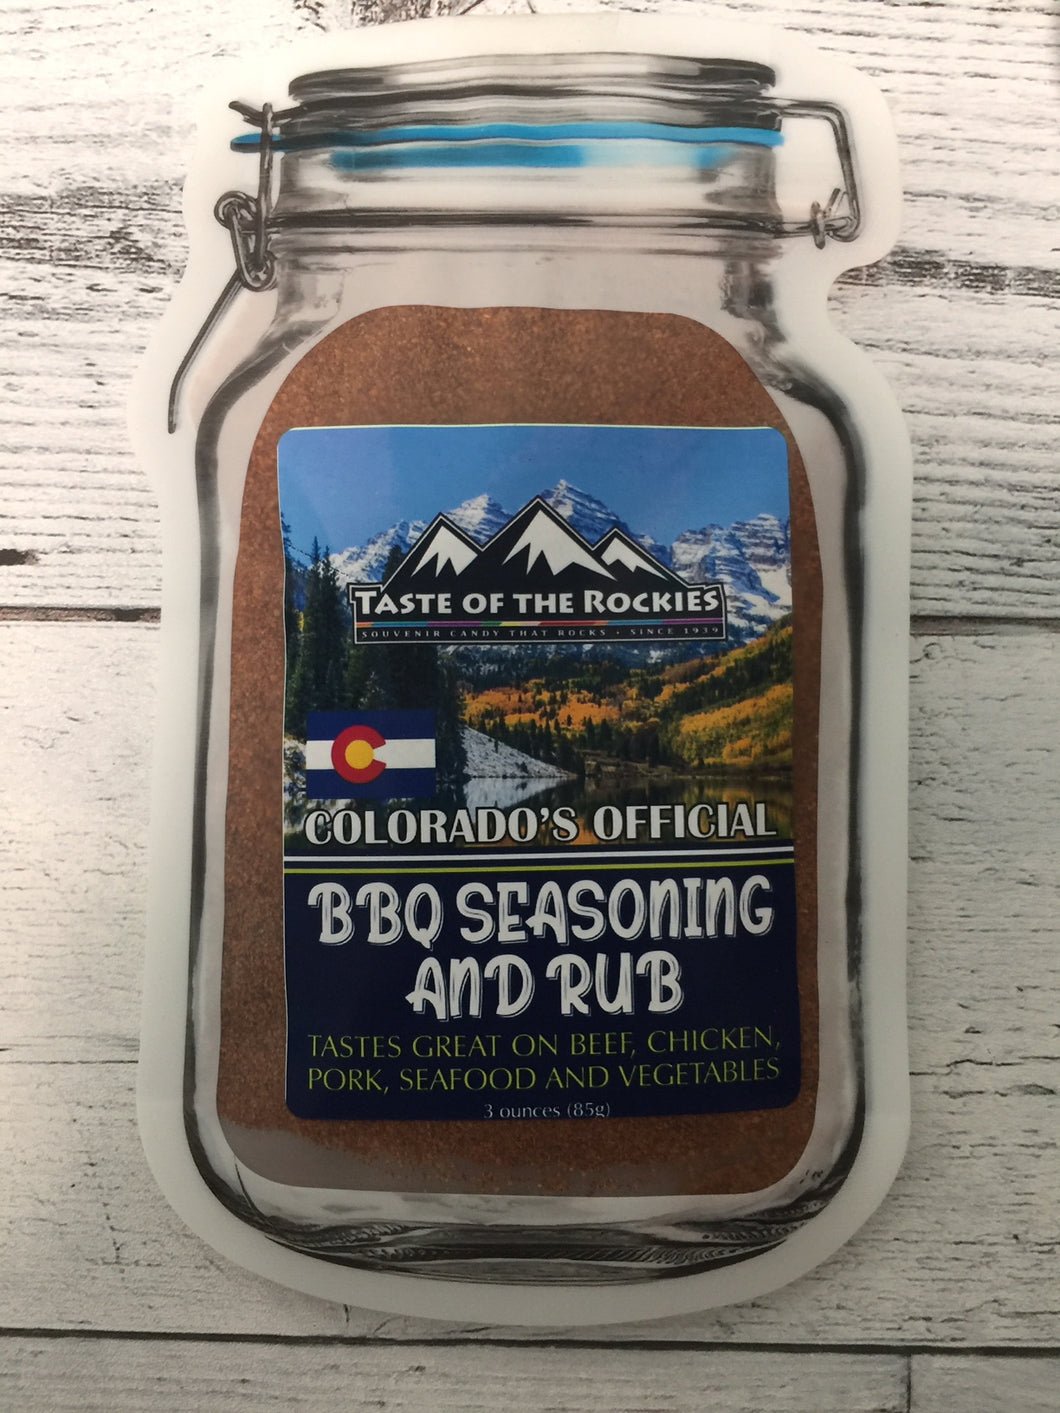 Colorado's Official BBQ Seasoning and Rub